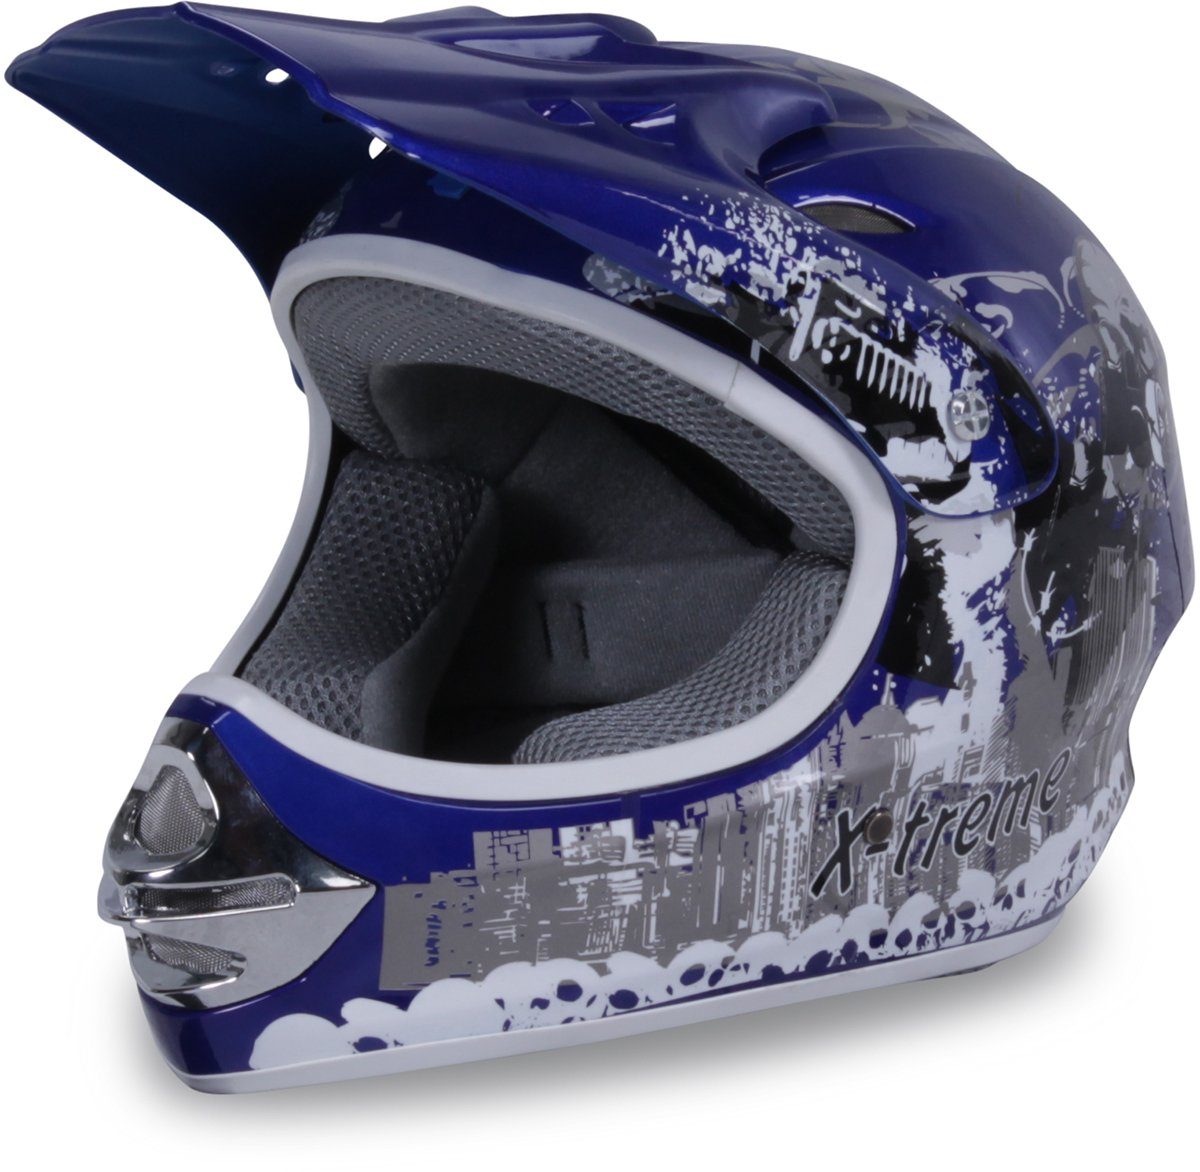 Actionbikes Motors Motocrosshelm »Crosshelm X-treme Blau«, 6 verschiedene  Größen - 49 cm bis 60 cm Kopfumfang - Kinnriemen - Be- & Entlüftungssystem  - herausnehmbares Innenpolster - Kinderhelm Crosshelm Kopfschutz  Mountainbike Helm online kaufen | OTTO